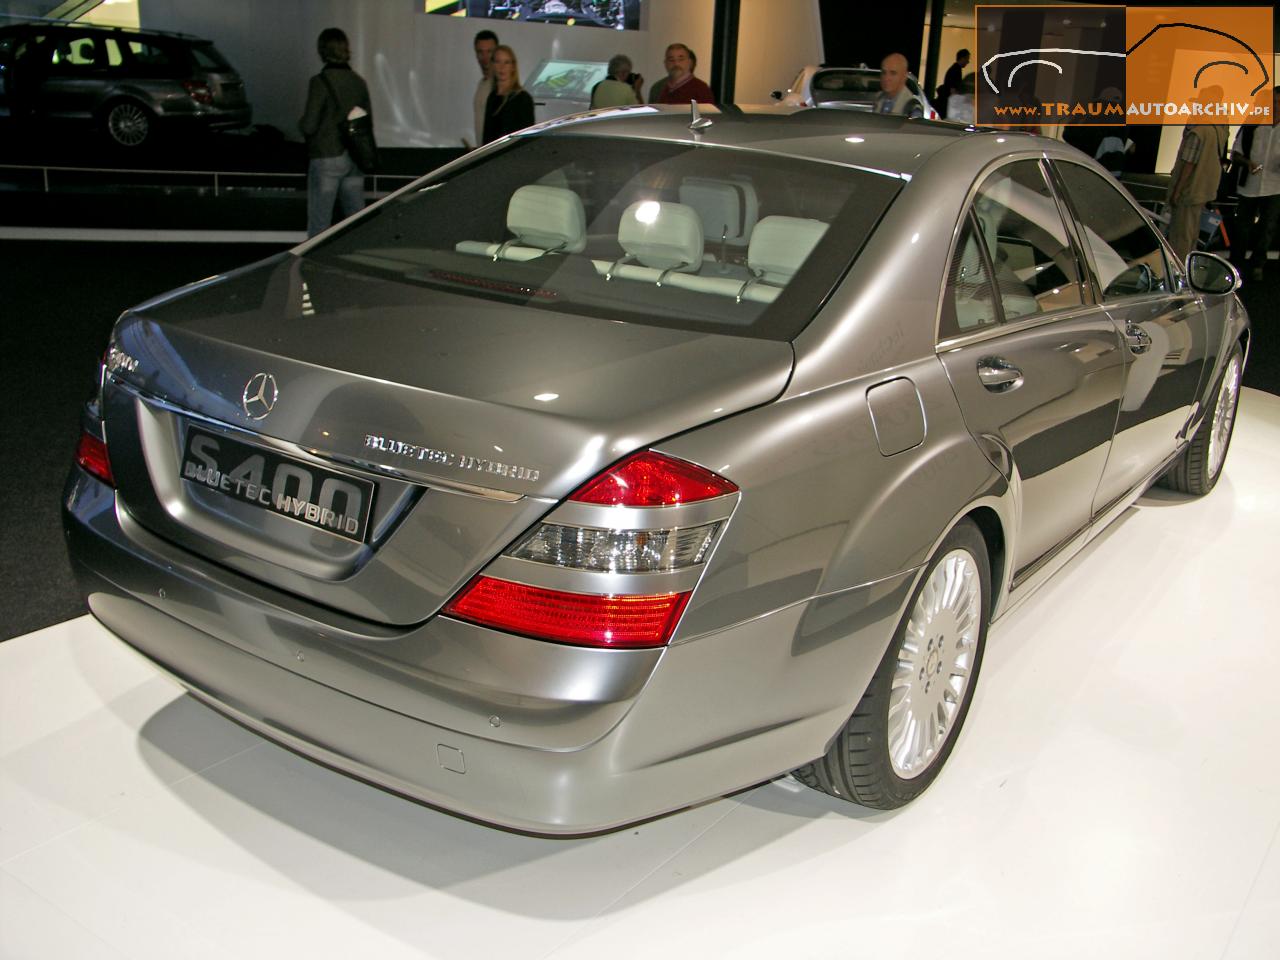 Mercedes-Benz S 400 Bluetec Hybrid '2007.jpg 128.4K